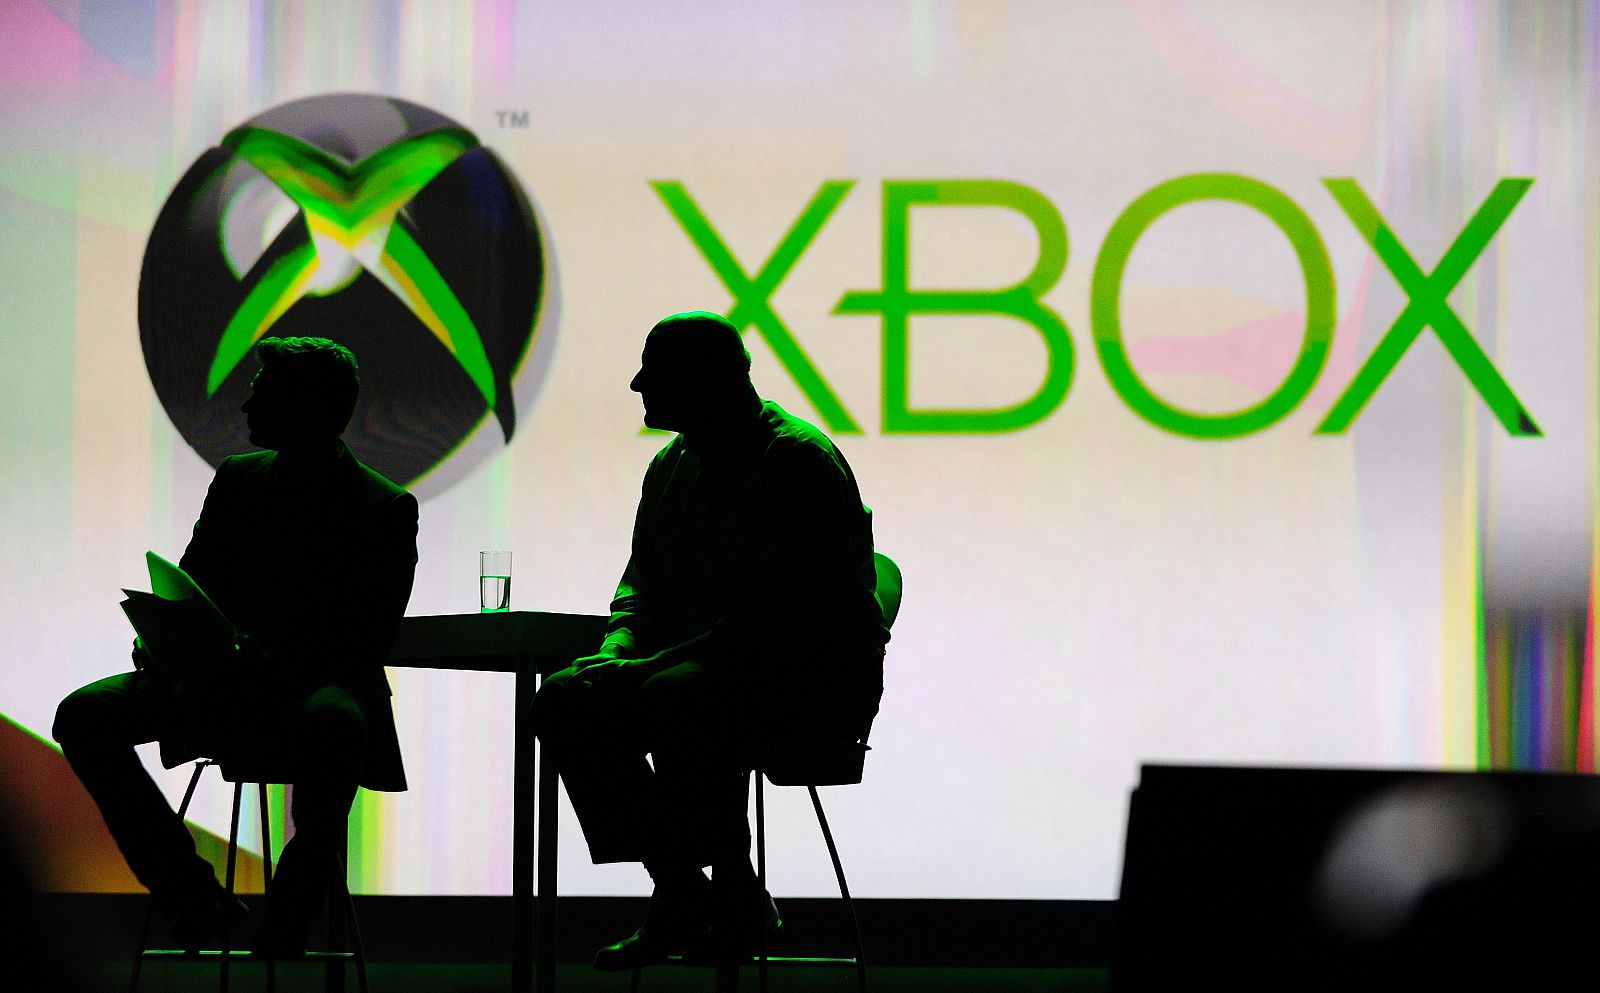 US commission says Xbox infringes Motorola patents